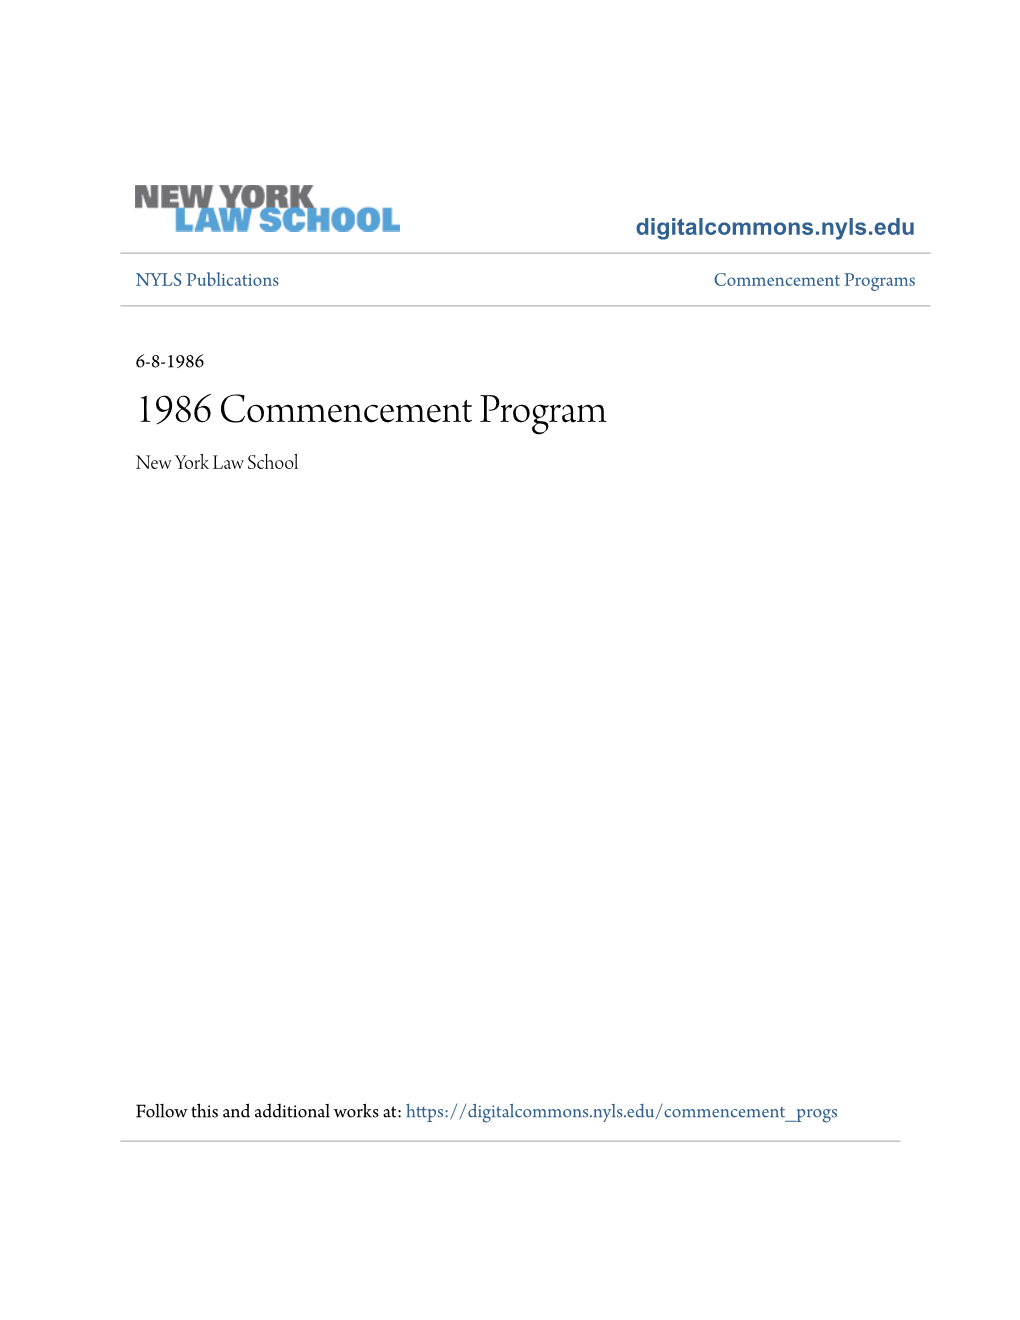 1986 Commencement Program New York Law School